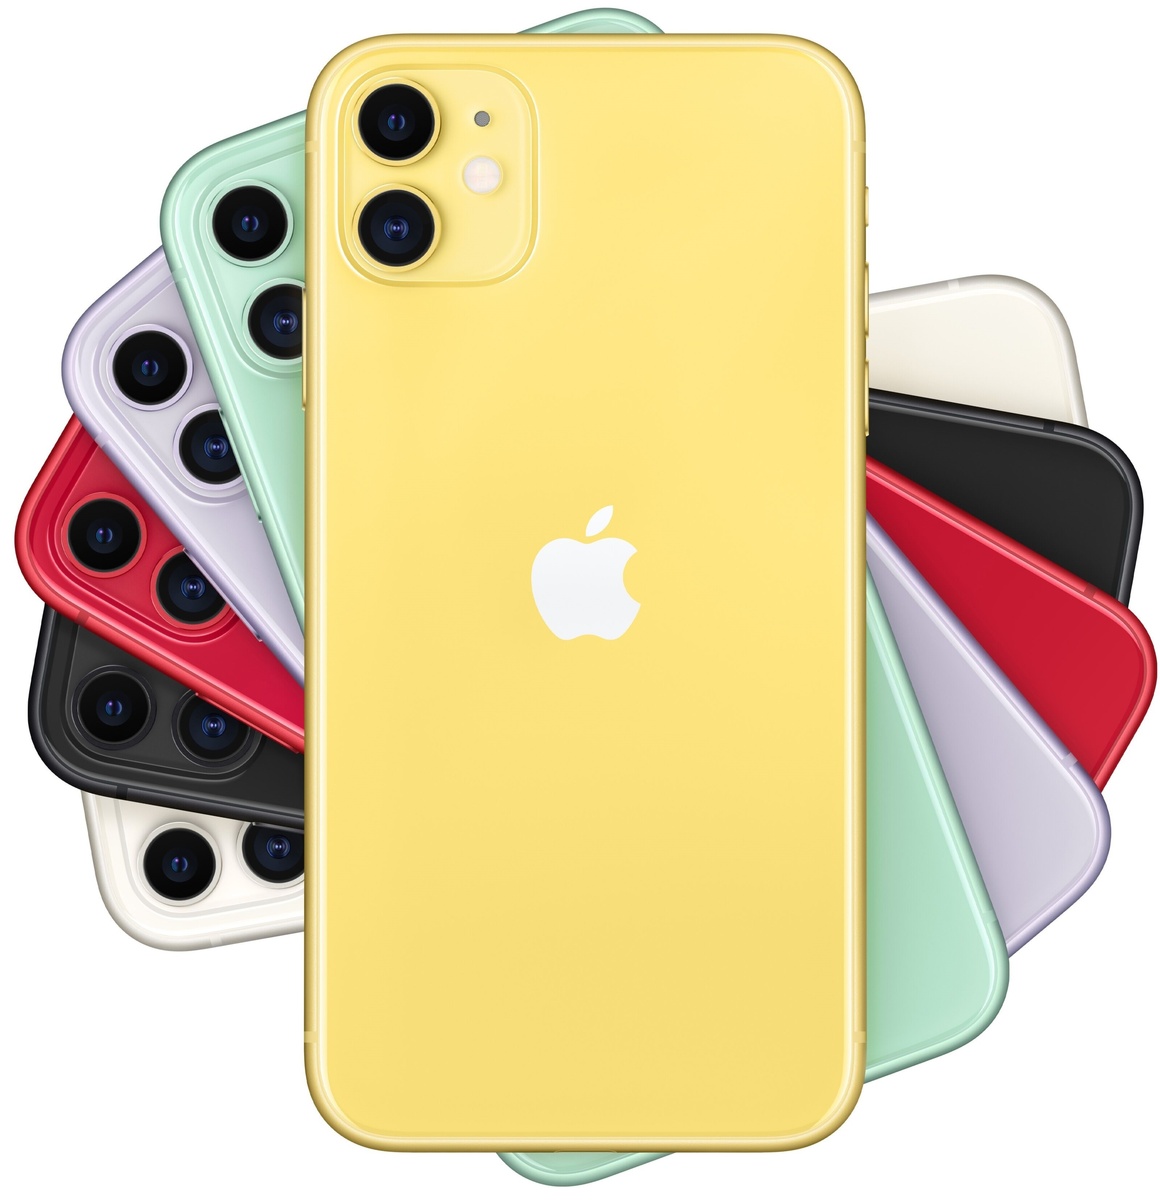 iPhone 11 128 Yellow MWLH2